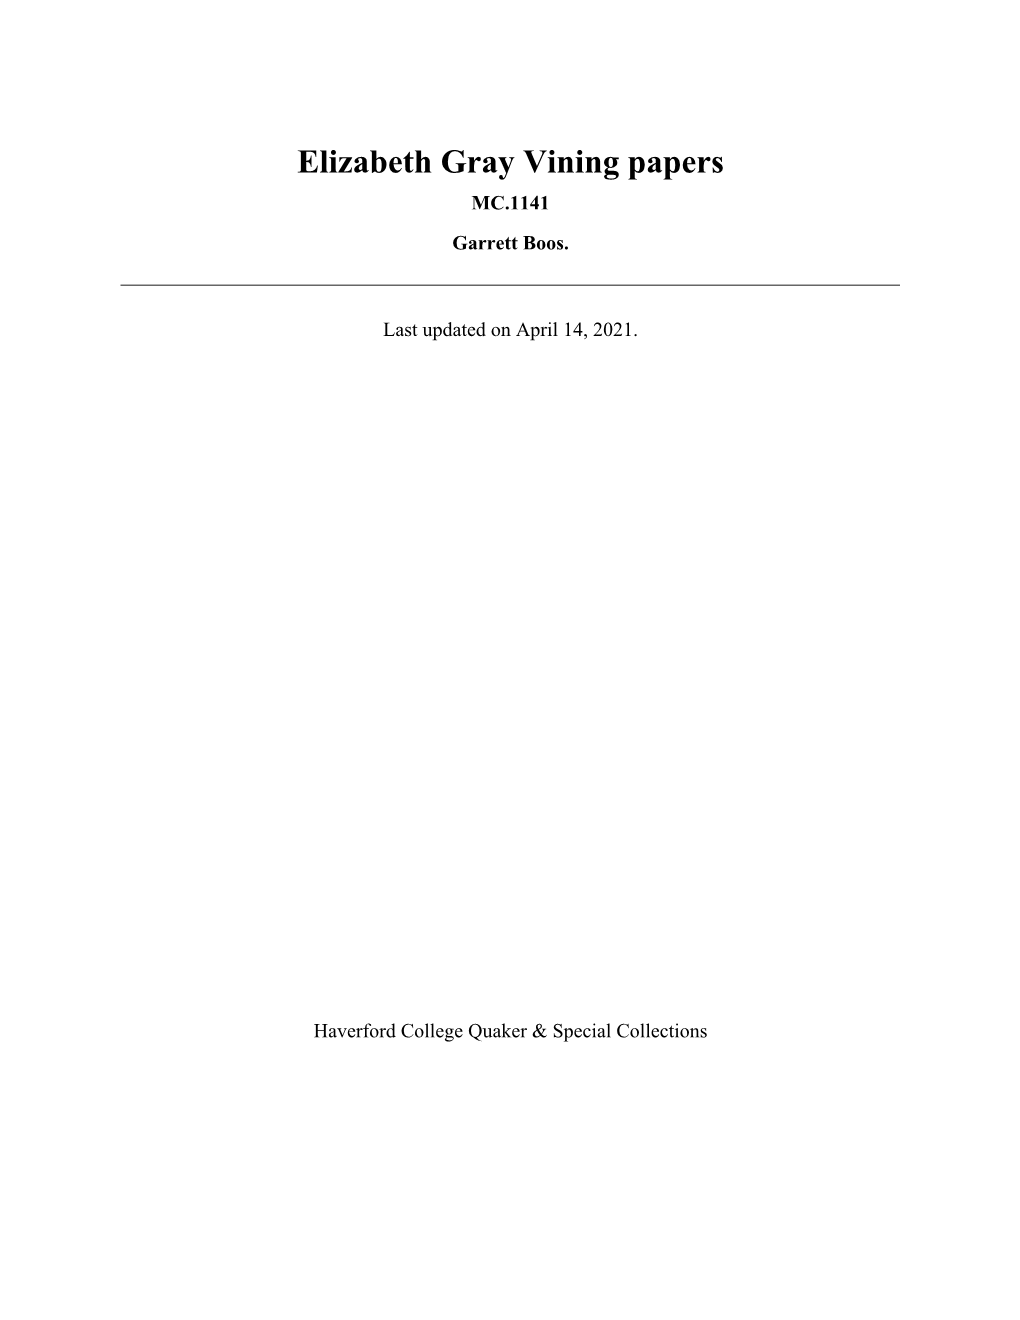 Elizabeth Gray Vining Papers MC.1141 Garrett Boos